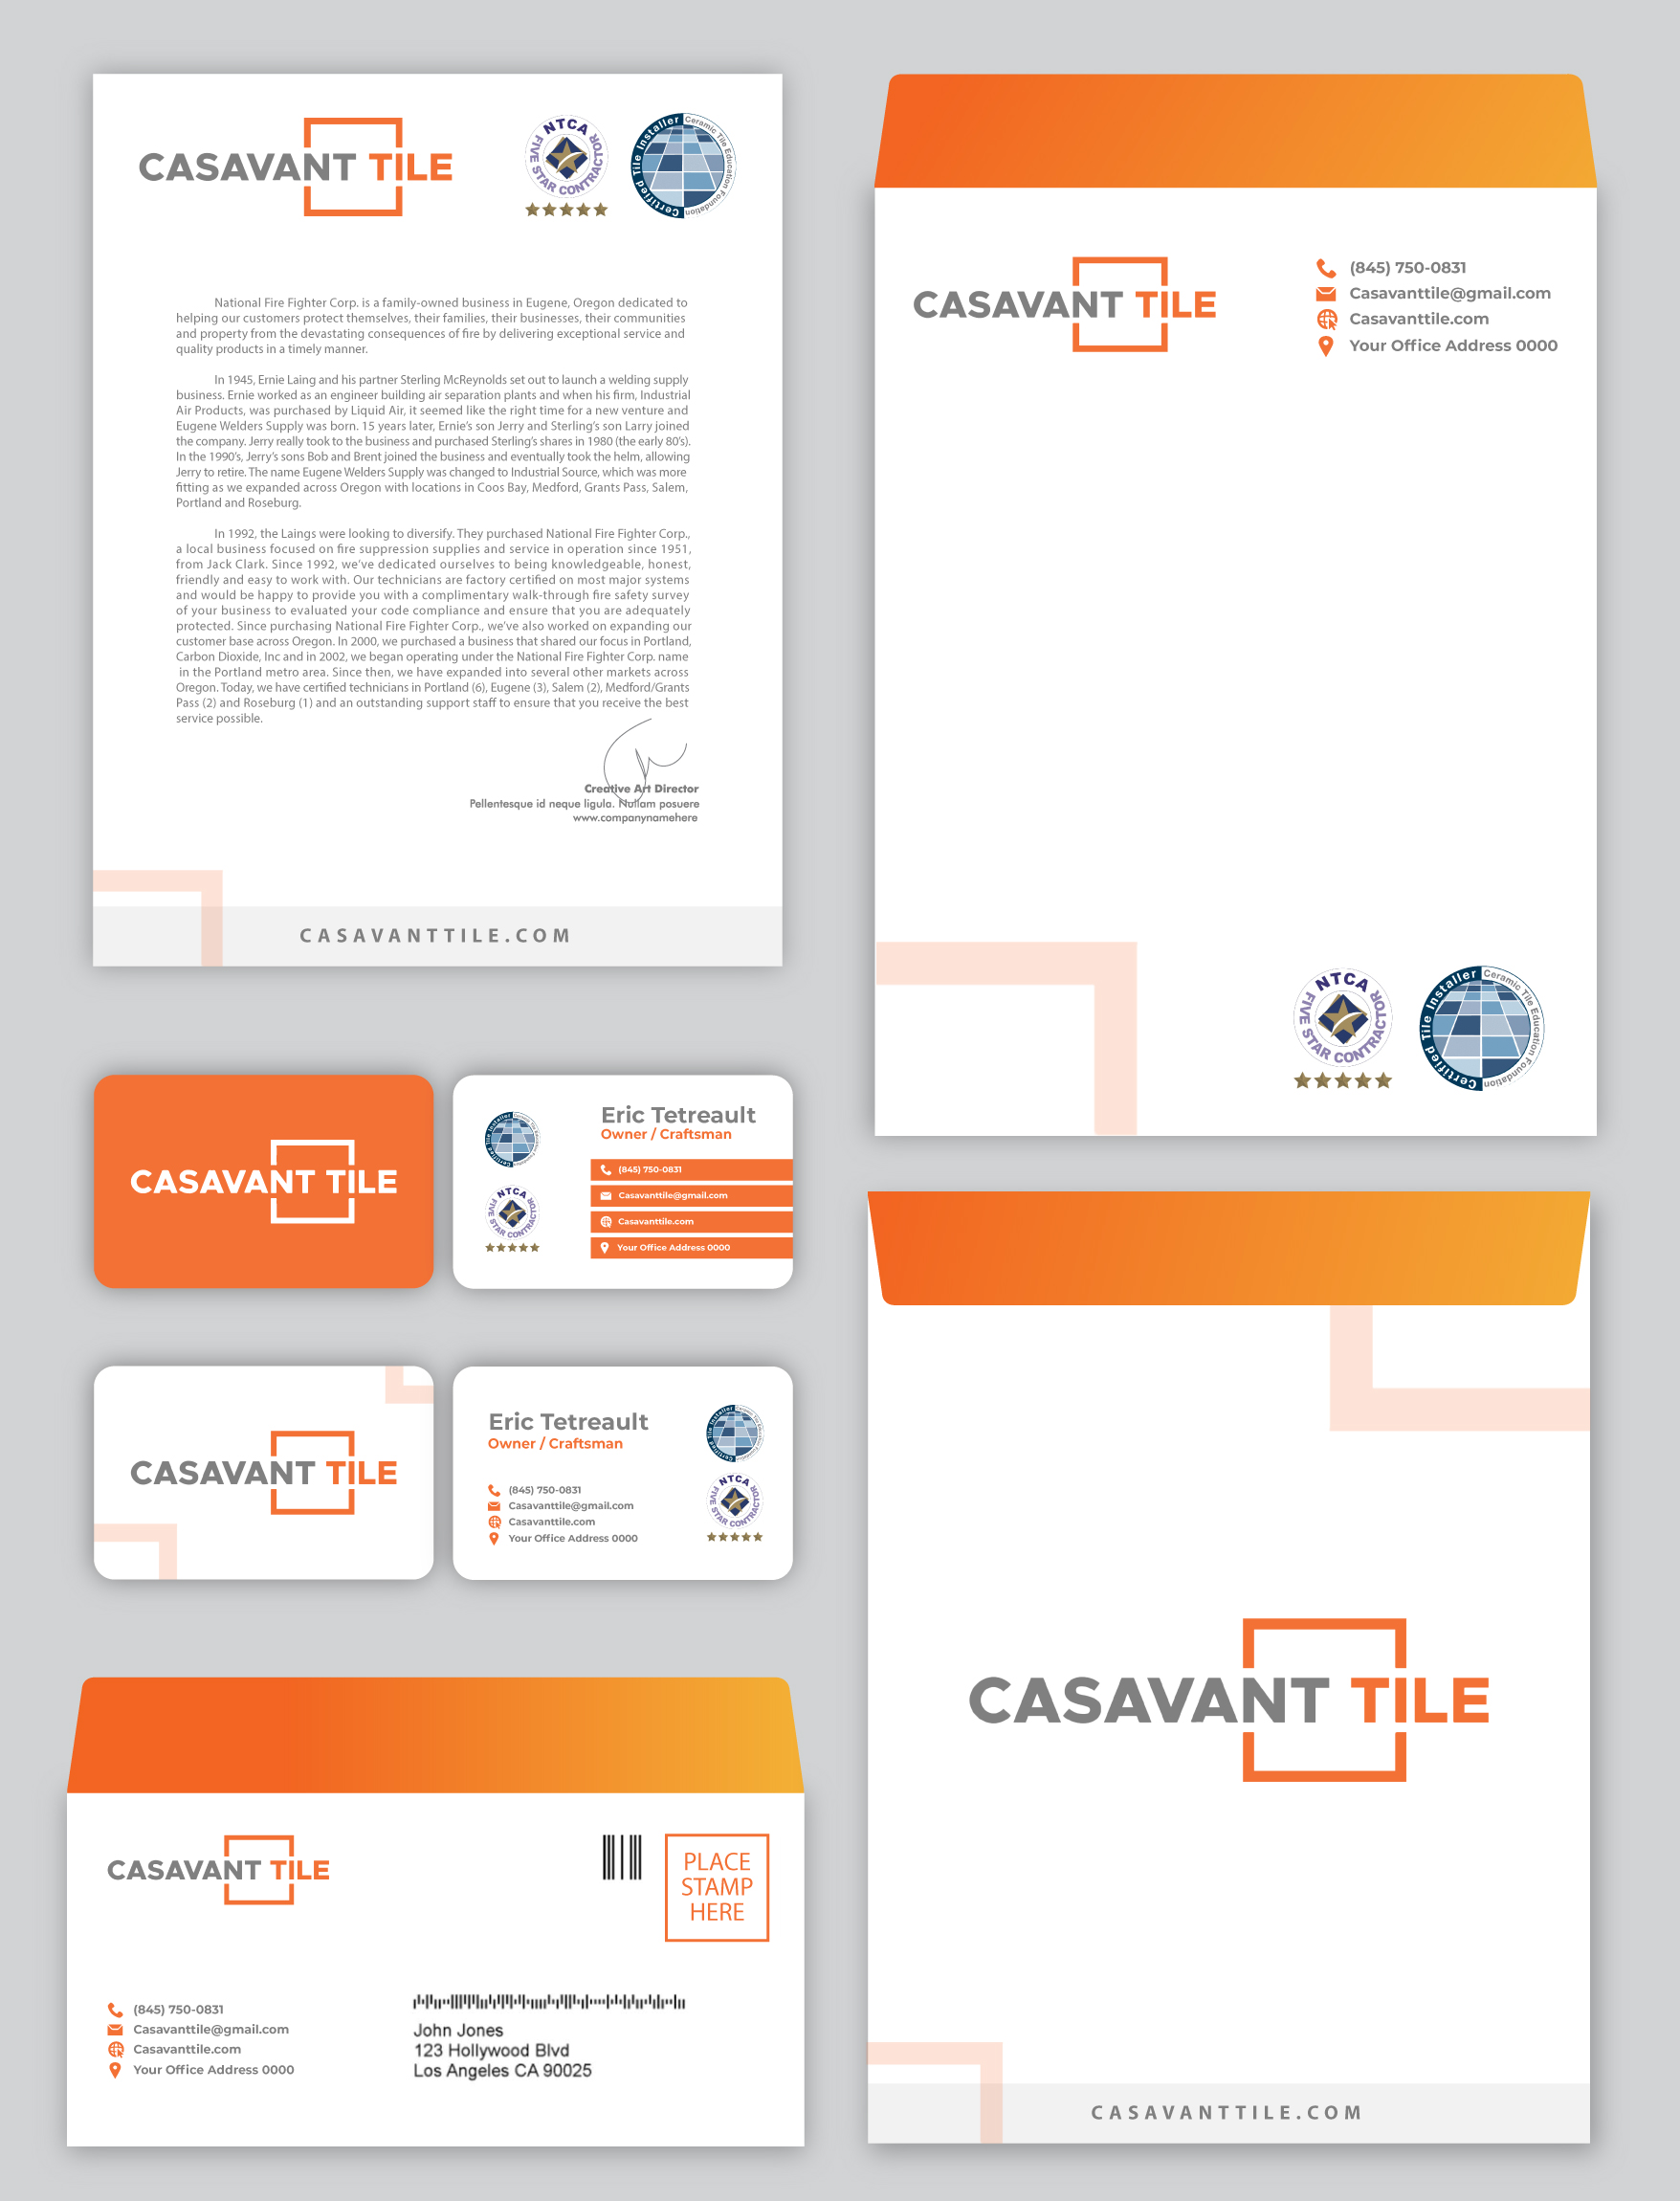 Business Card & Stationery Design entry 1776402 submitted by beekitty7 to the Business Card & Stationery Design for Casavant Tile run by CasavantTile